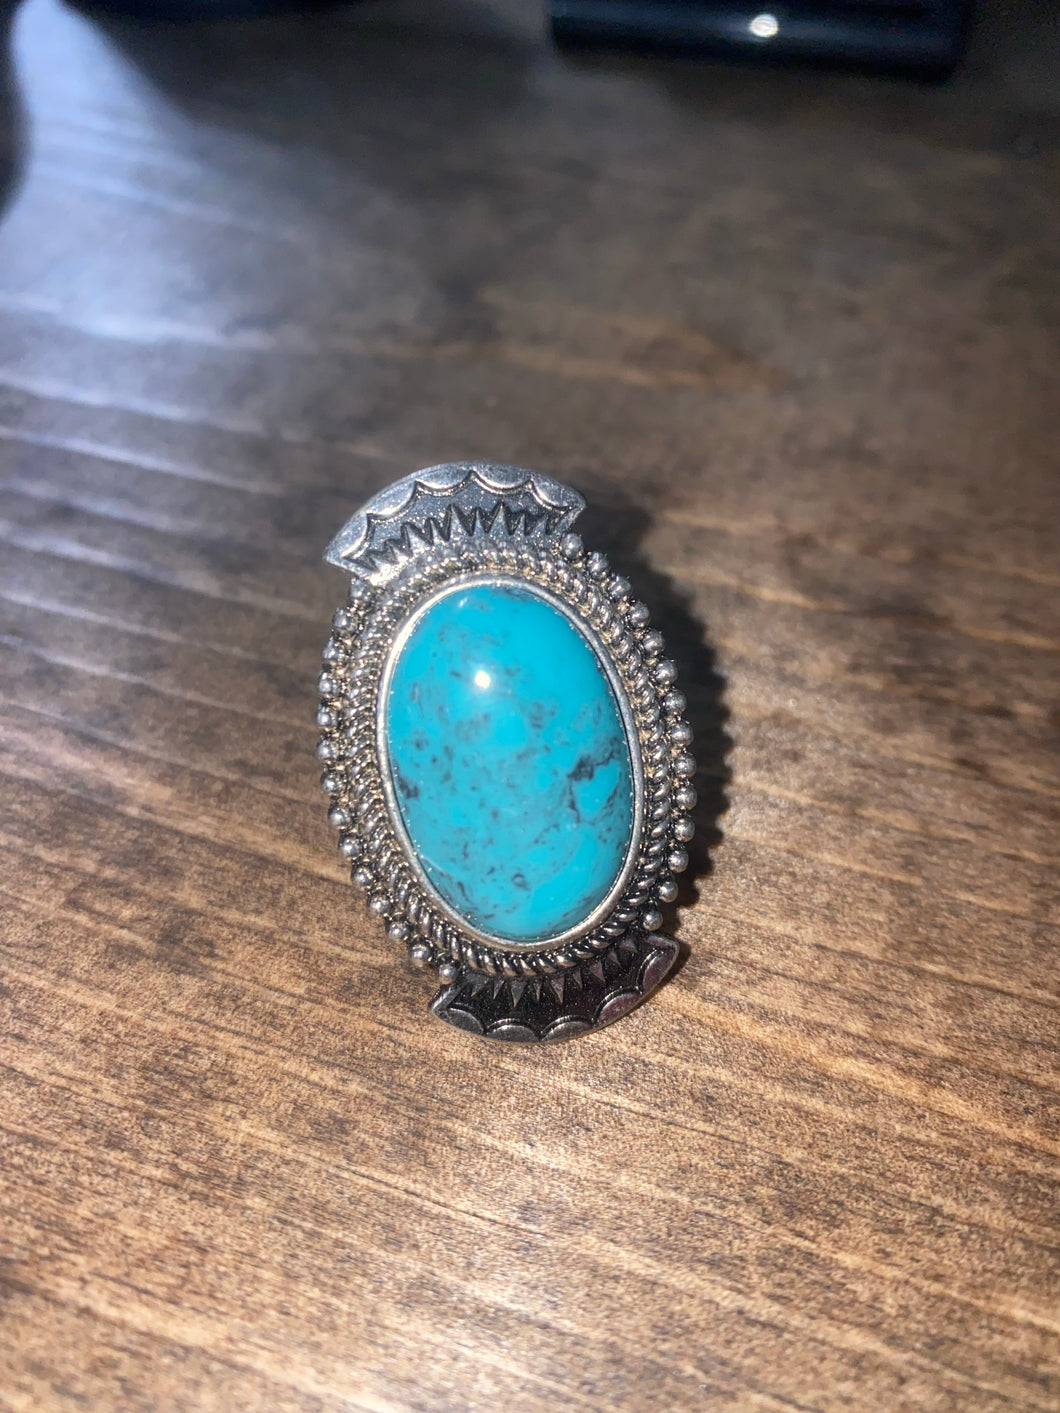 Bella Turquoise Ring